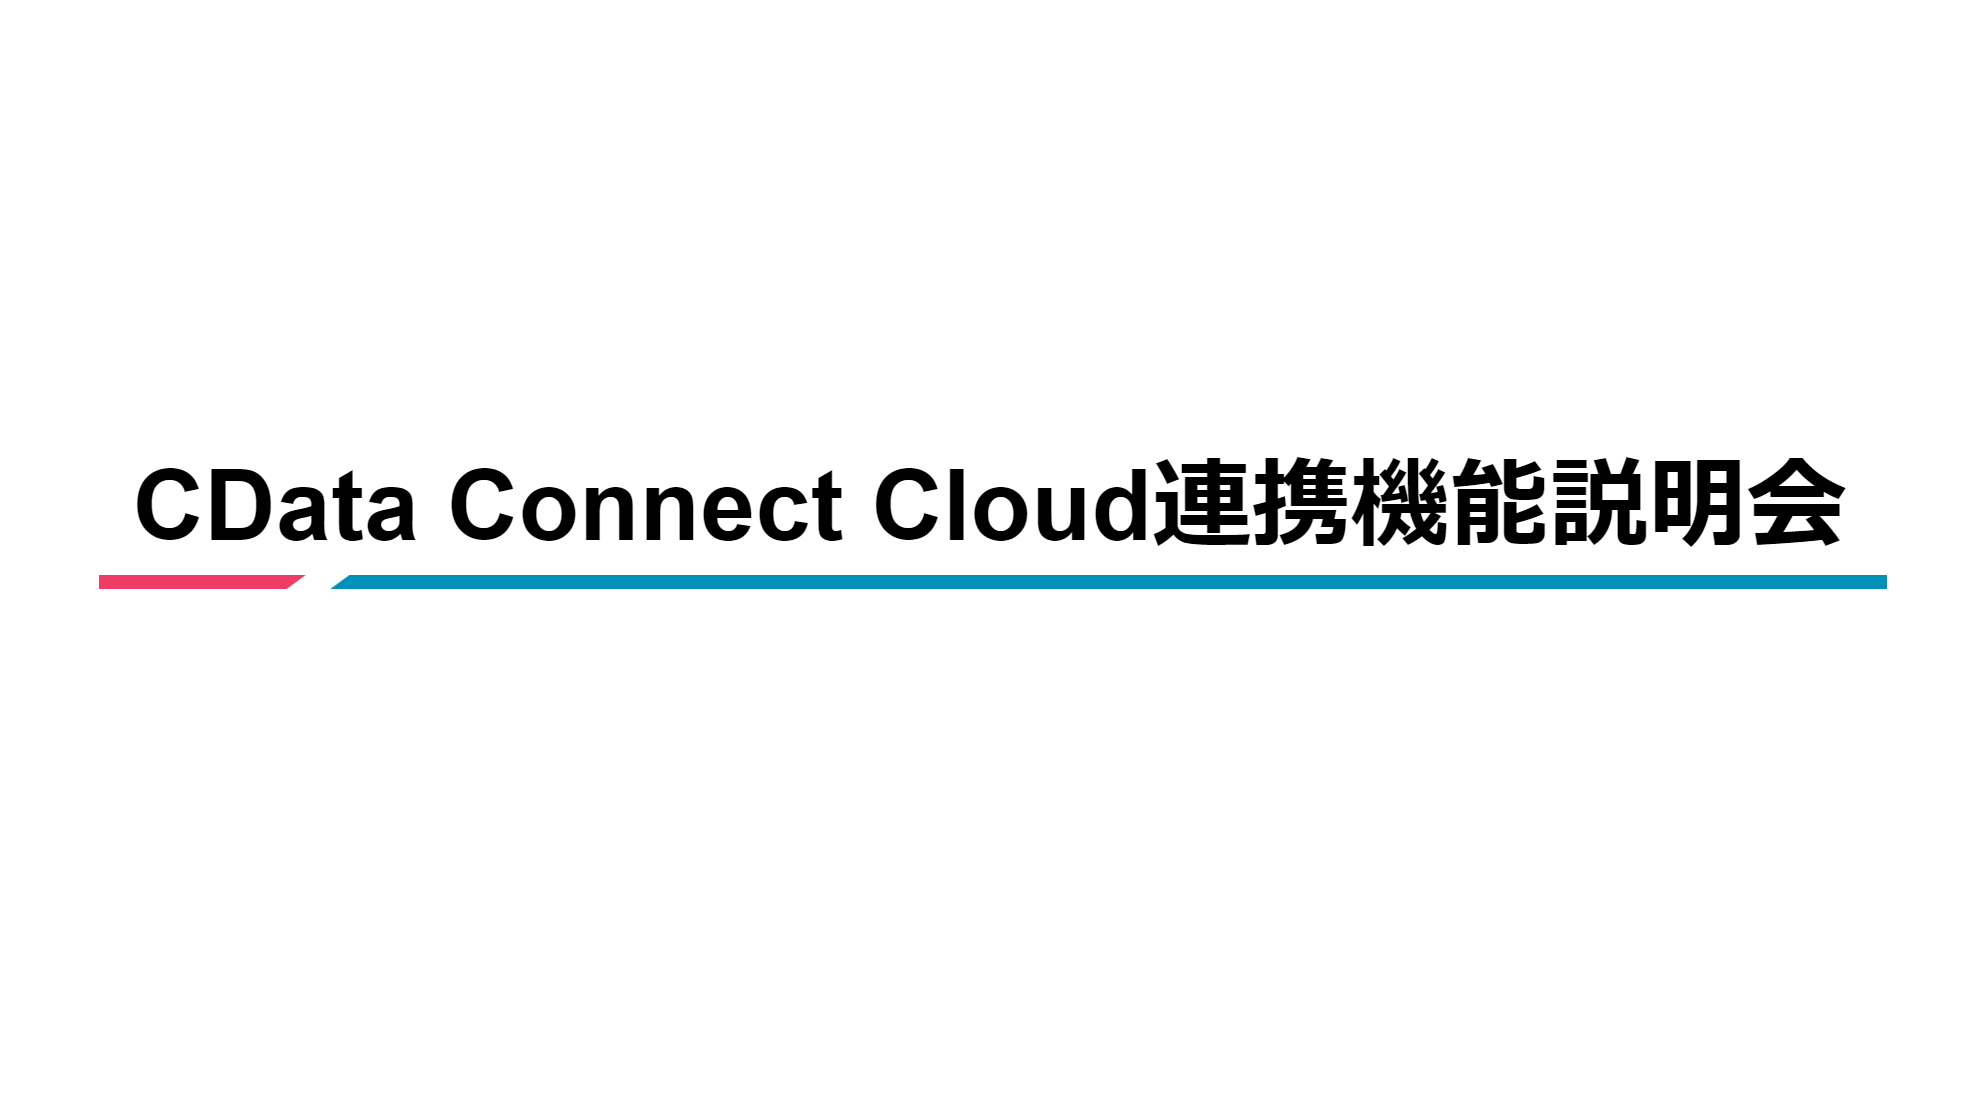 krewData「CData Connect Cloud 連携機能」説明会